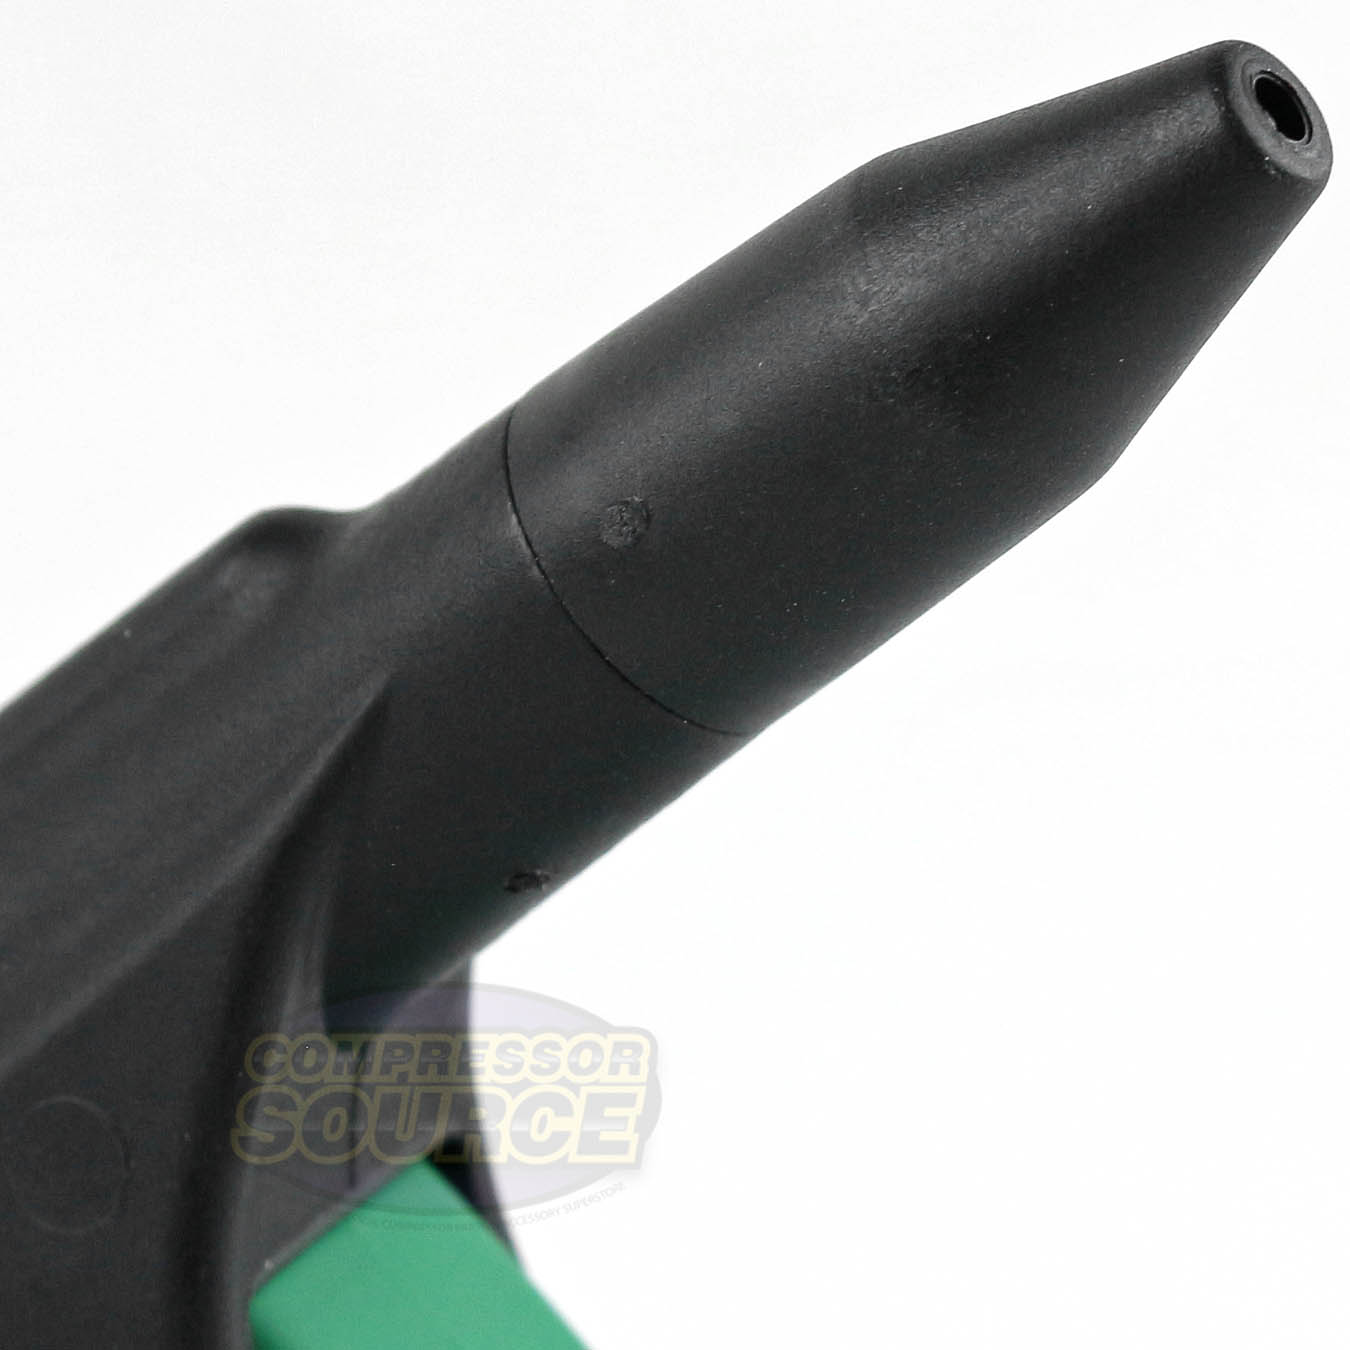 Prevost EBG07PRE PrevoS1 Blow Gun 174 PSI Max Composite Pinpoint Tip 1/4" High Flow Style Plug